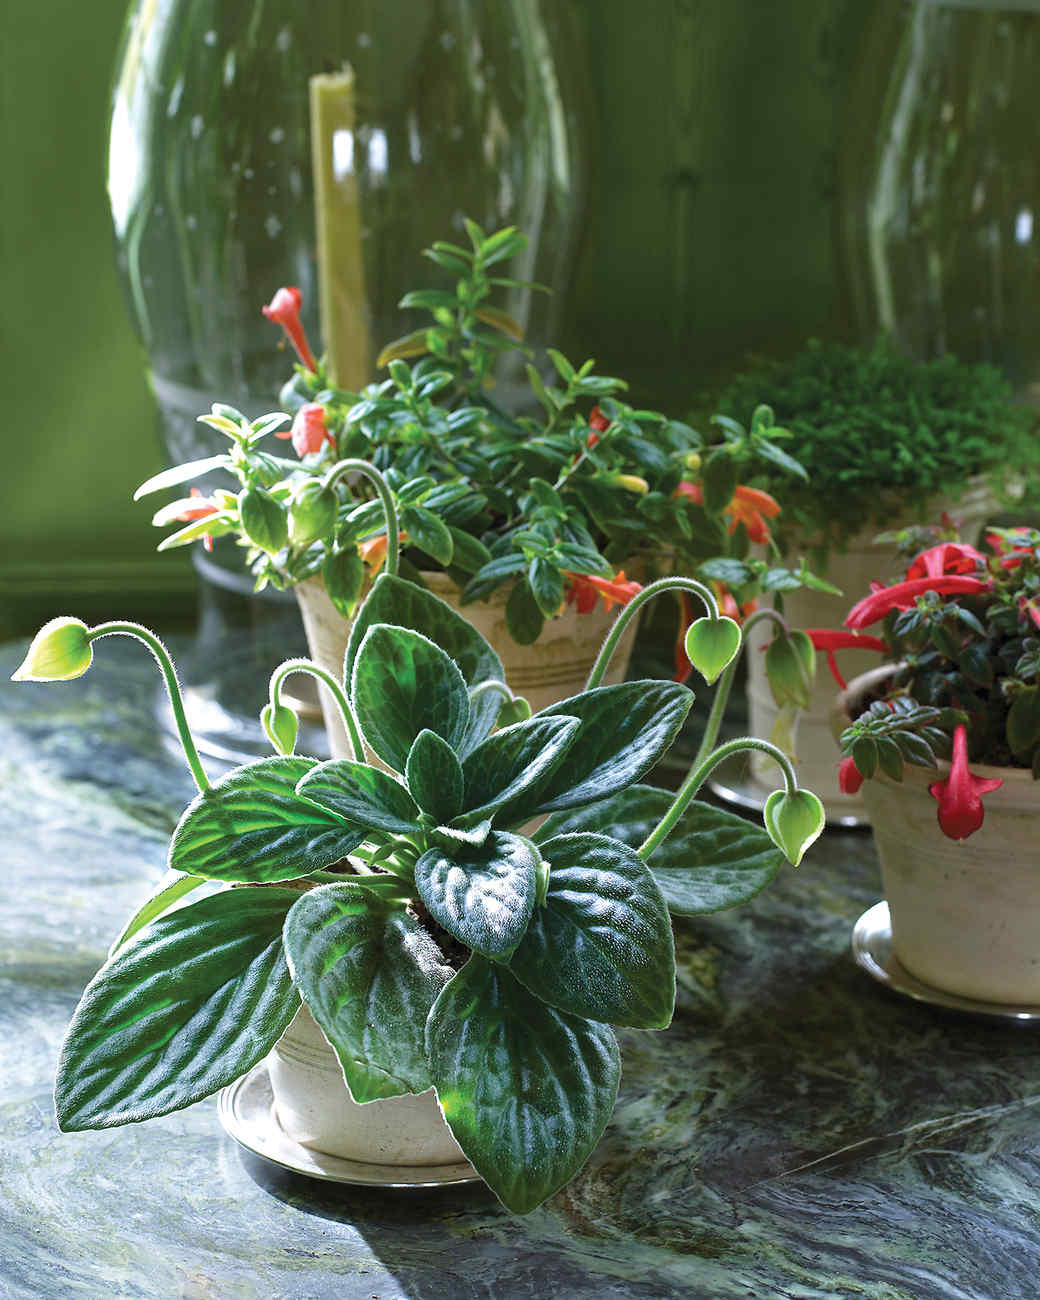 Martha's Home: Decorating with Houseplants | Martha Stewart